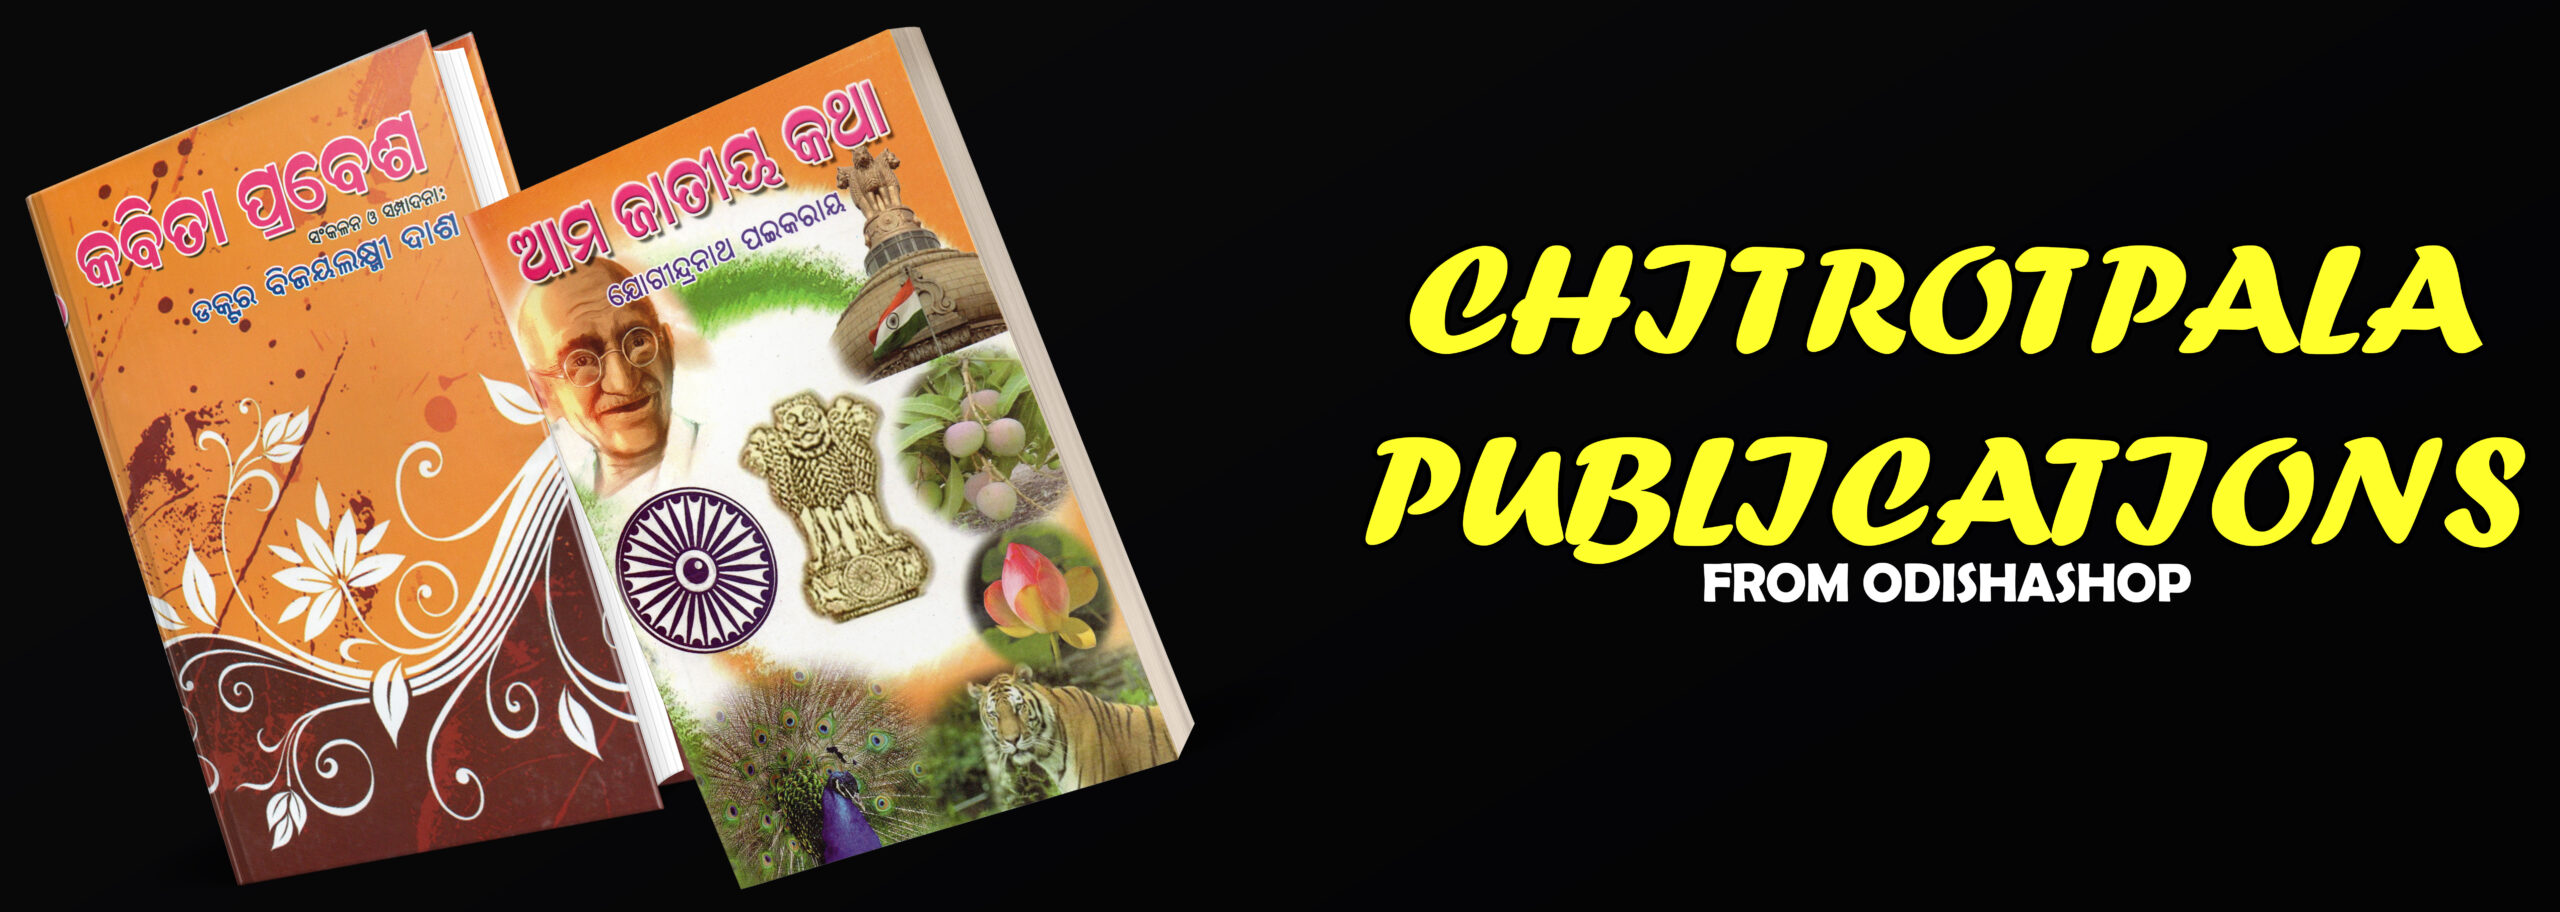 CHITROTPALA PUBLICATIONS